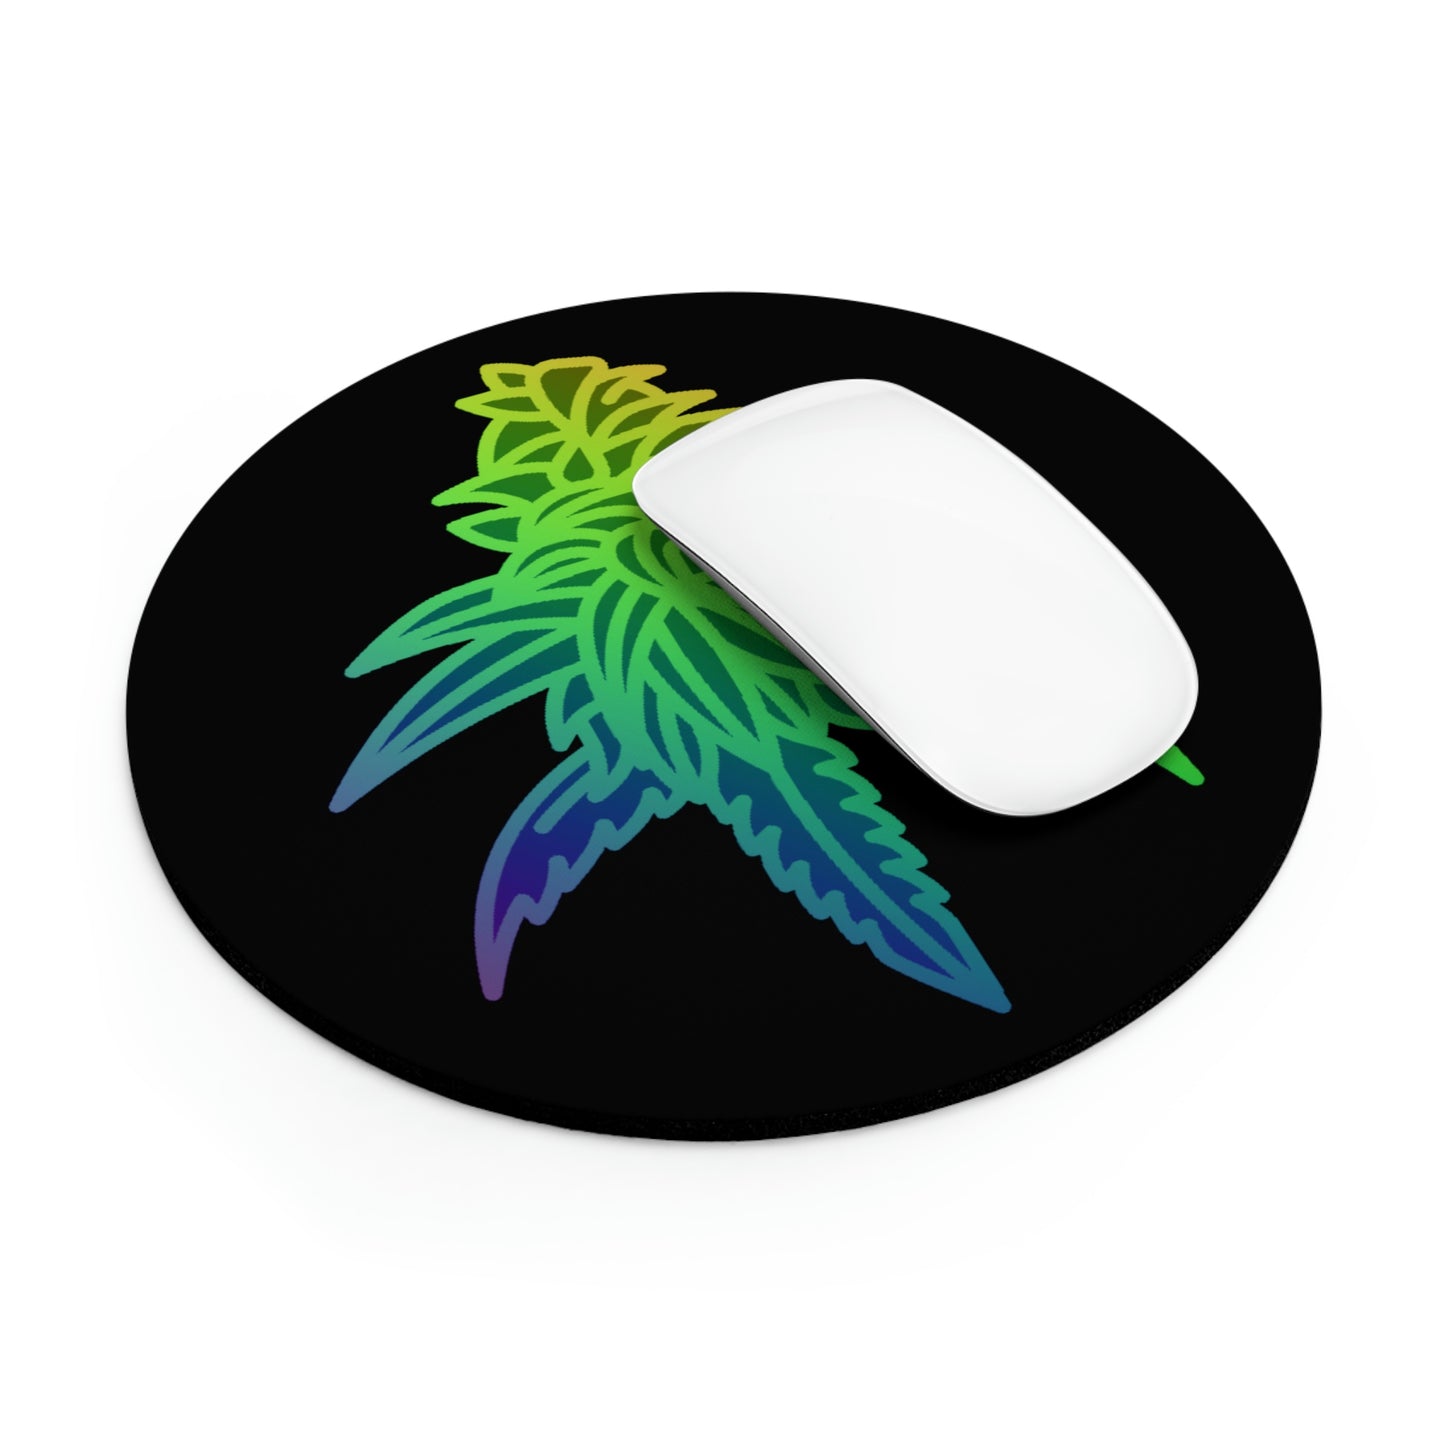 Rainbow Sherbet marijuana mouse pad.